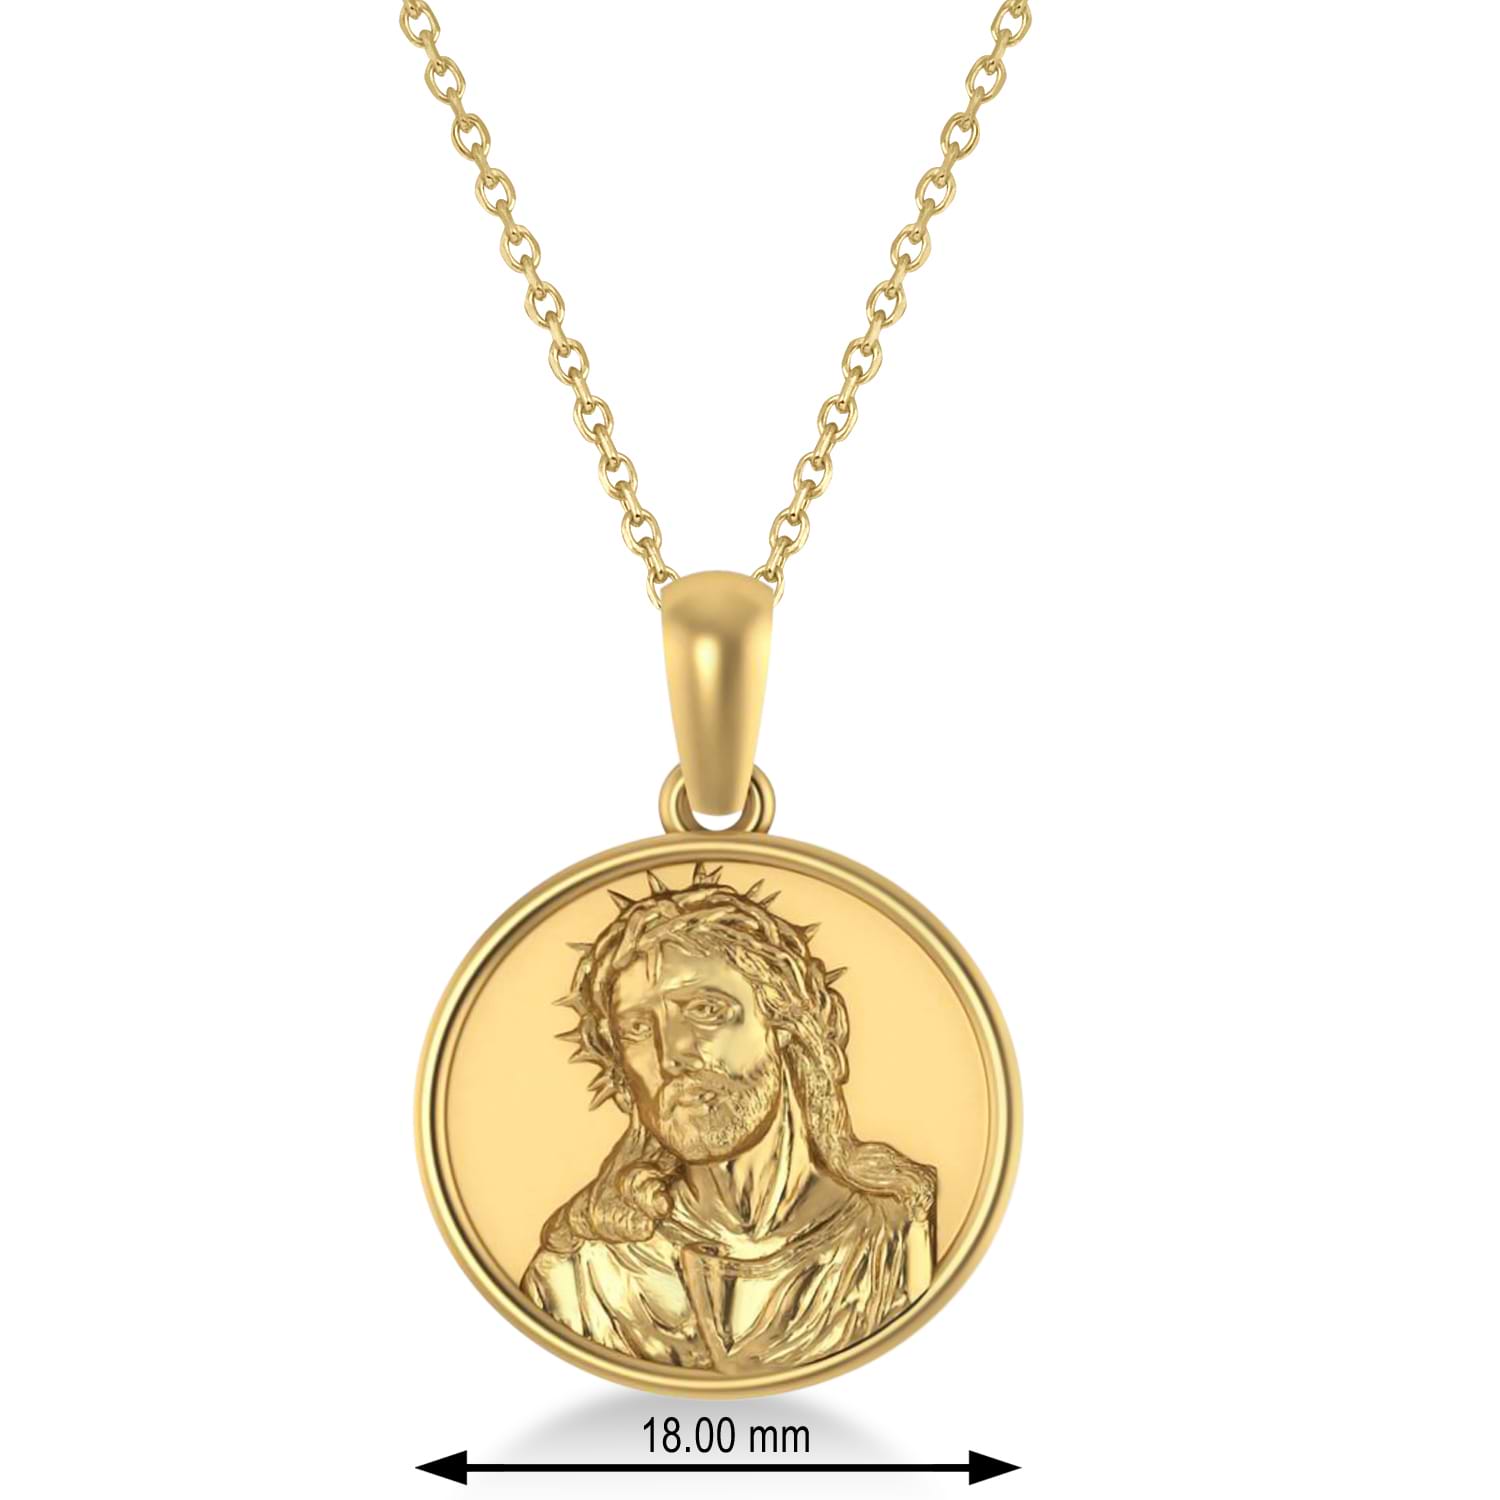 Jesus Christ Medal Pendant Necklace 14k Yellow Gold